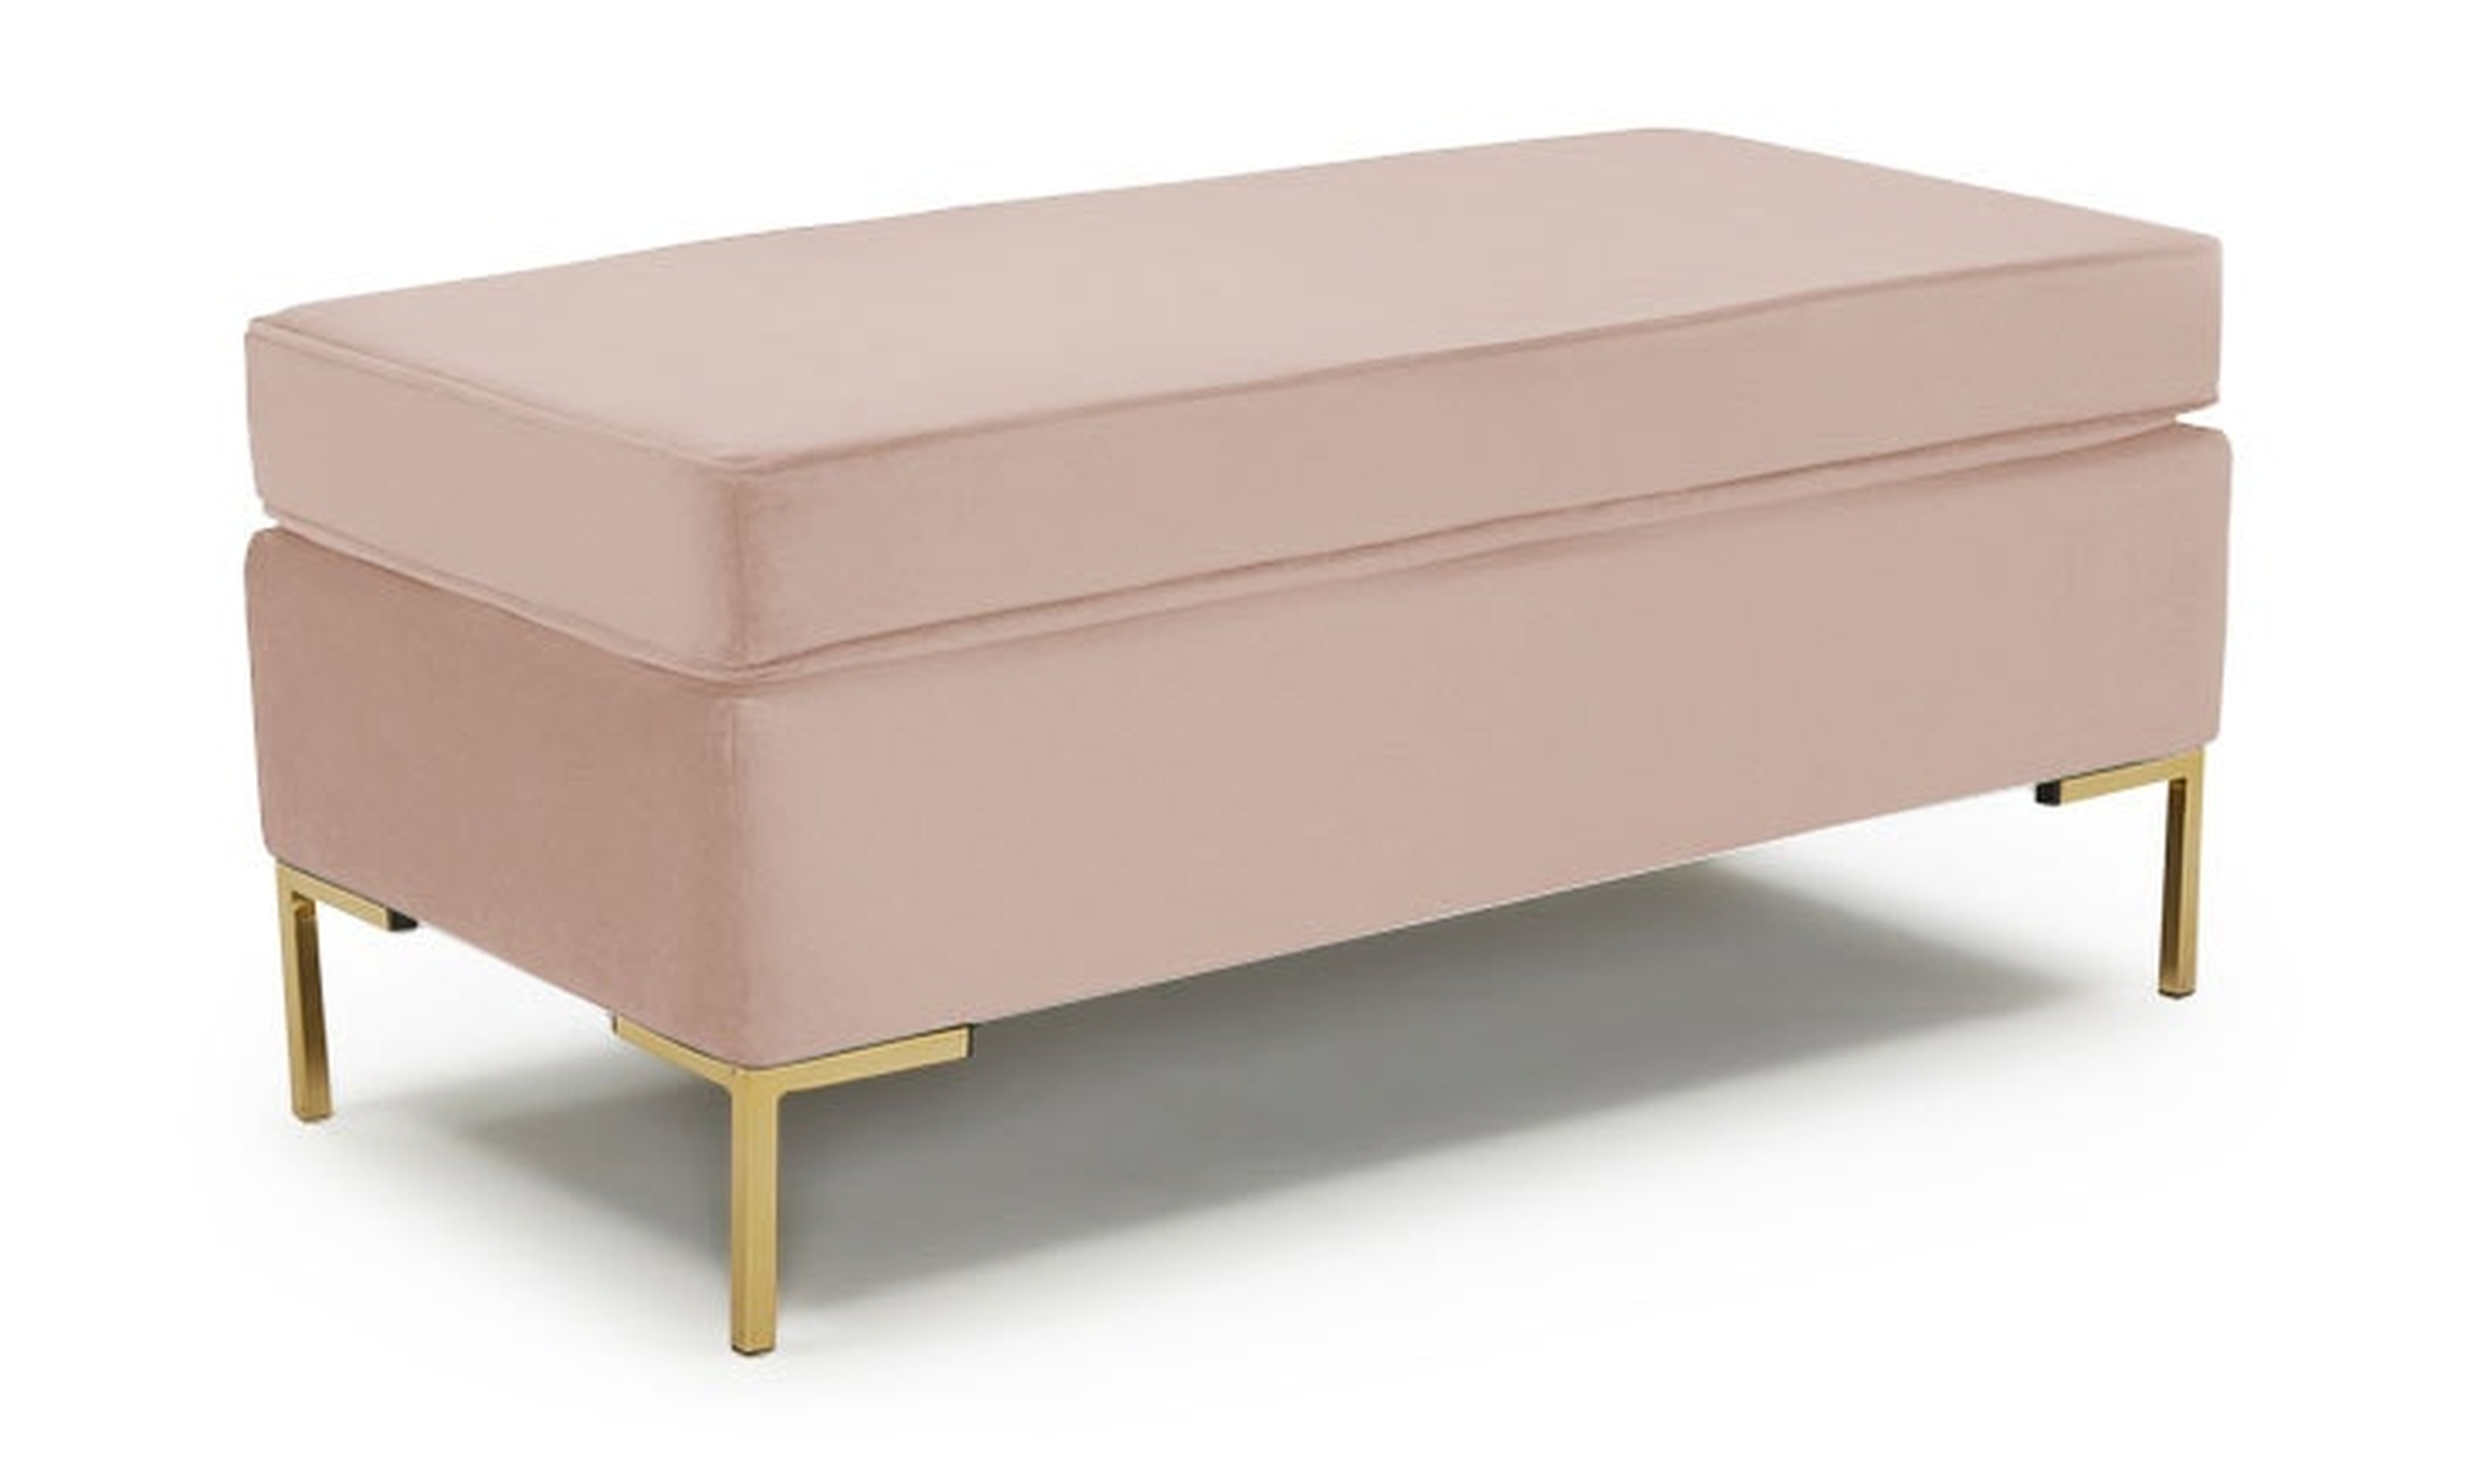 Woven Fabric Dee Mid Century Modern Bench with Storage - Key Largo Blush - Joybird